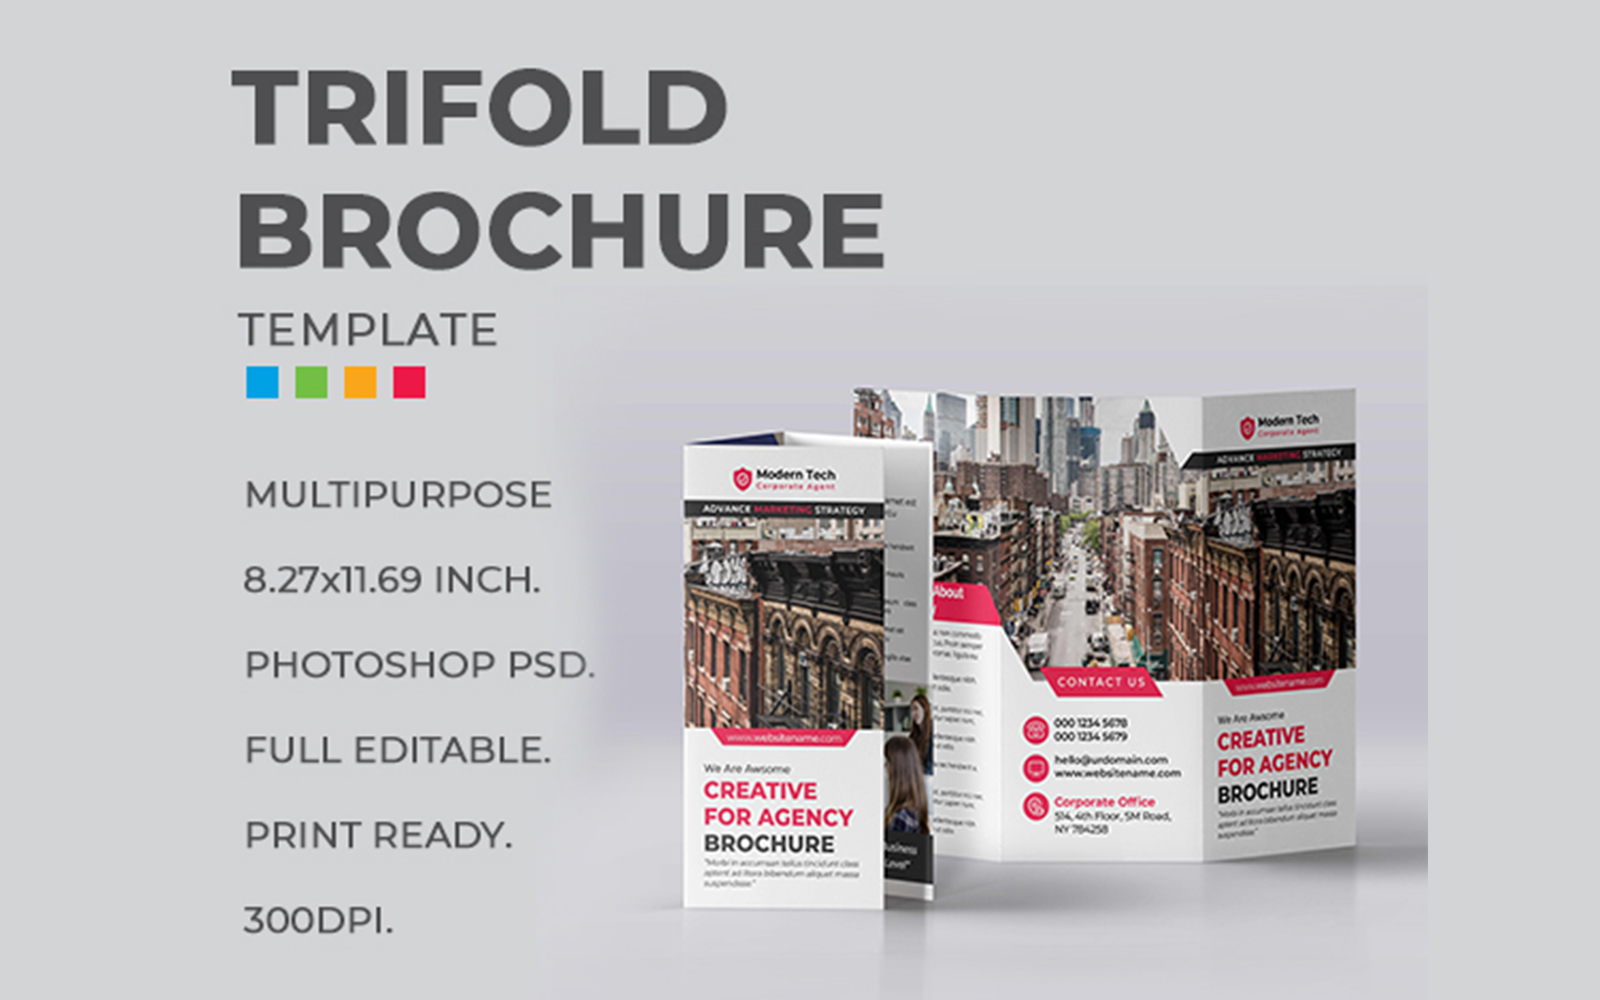 Trifold Brochure V1 - Corporate Identity Template